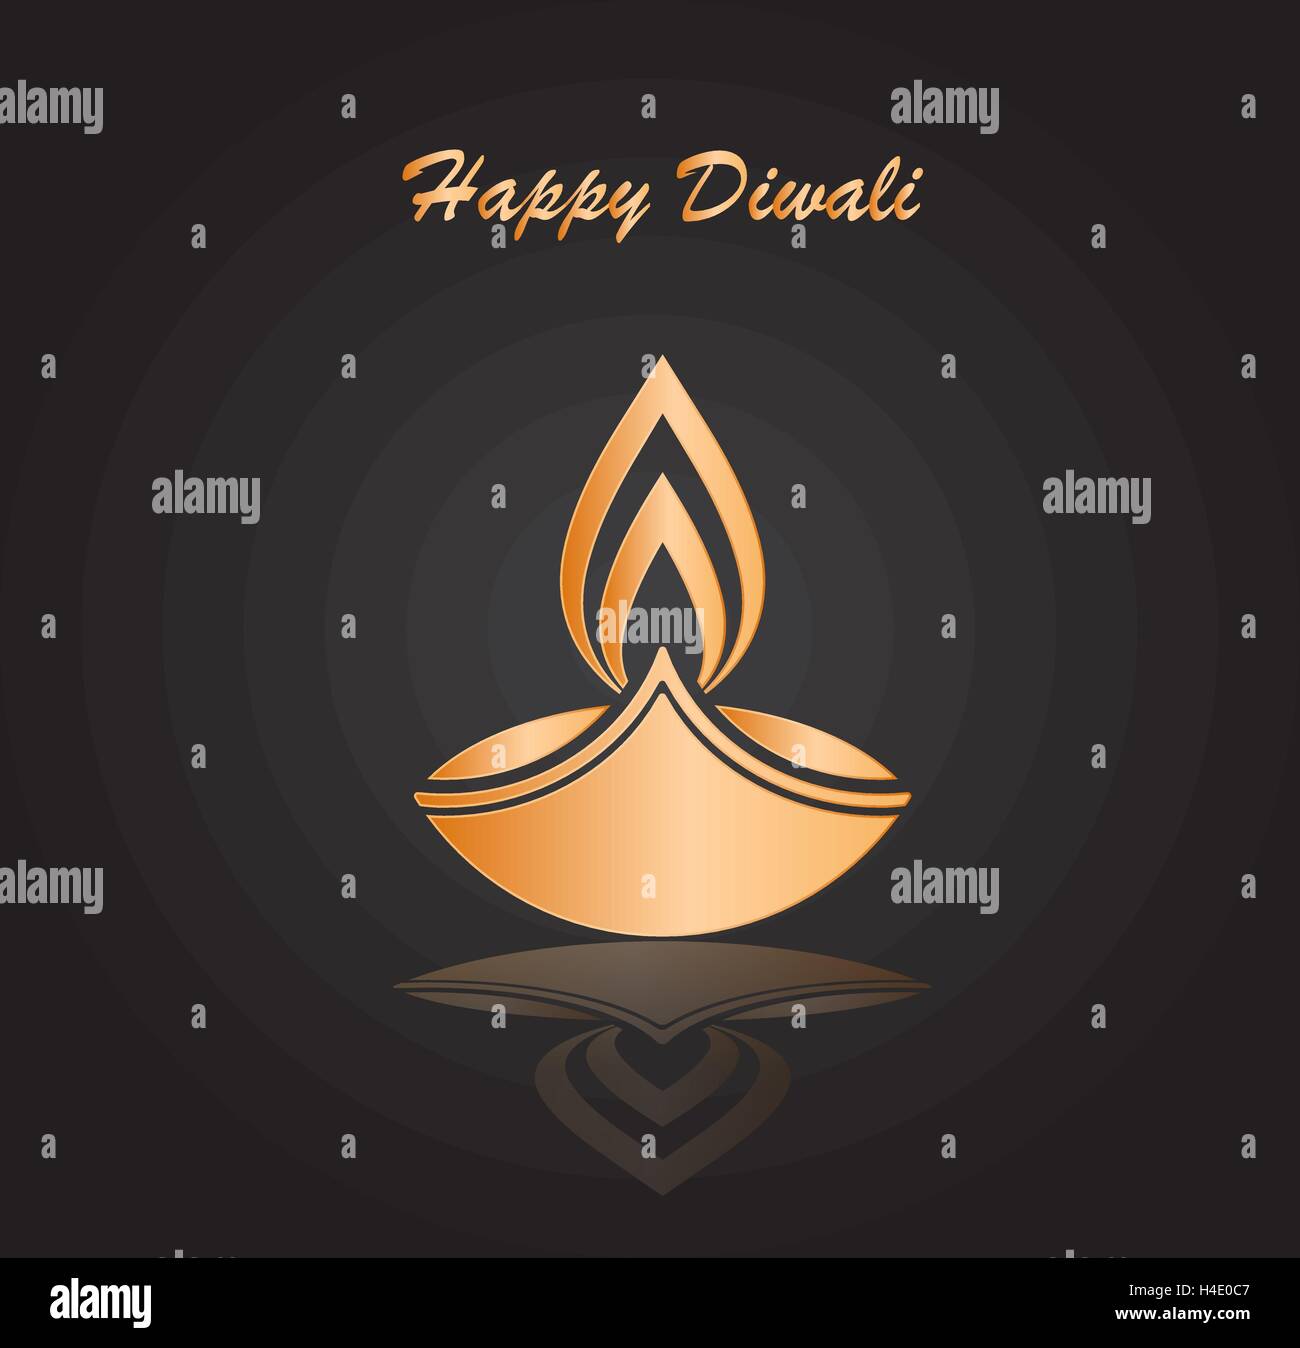 Happy Diwali traditionelle festliche Lampe Symbol goldene Farbe auf dunklem Hintergrund-Vektor-illustration Stock Vektor